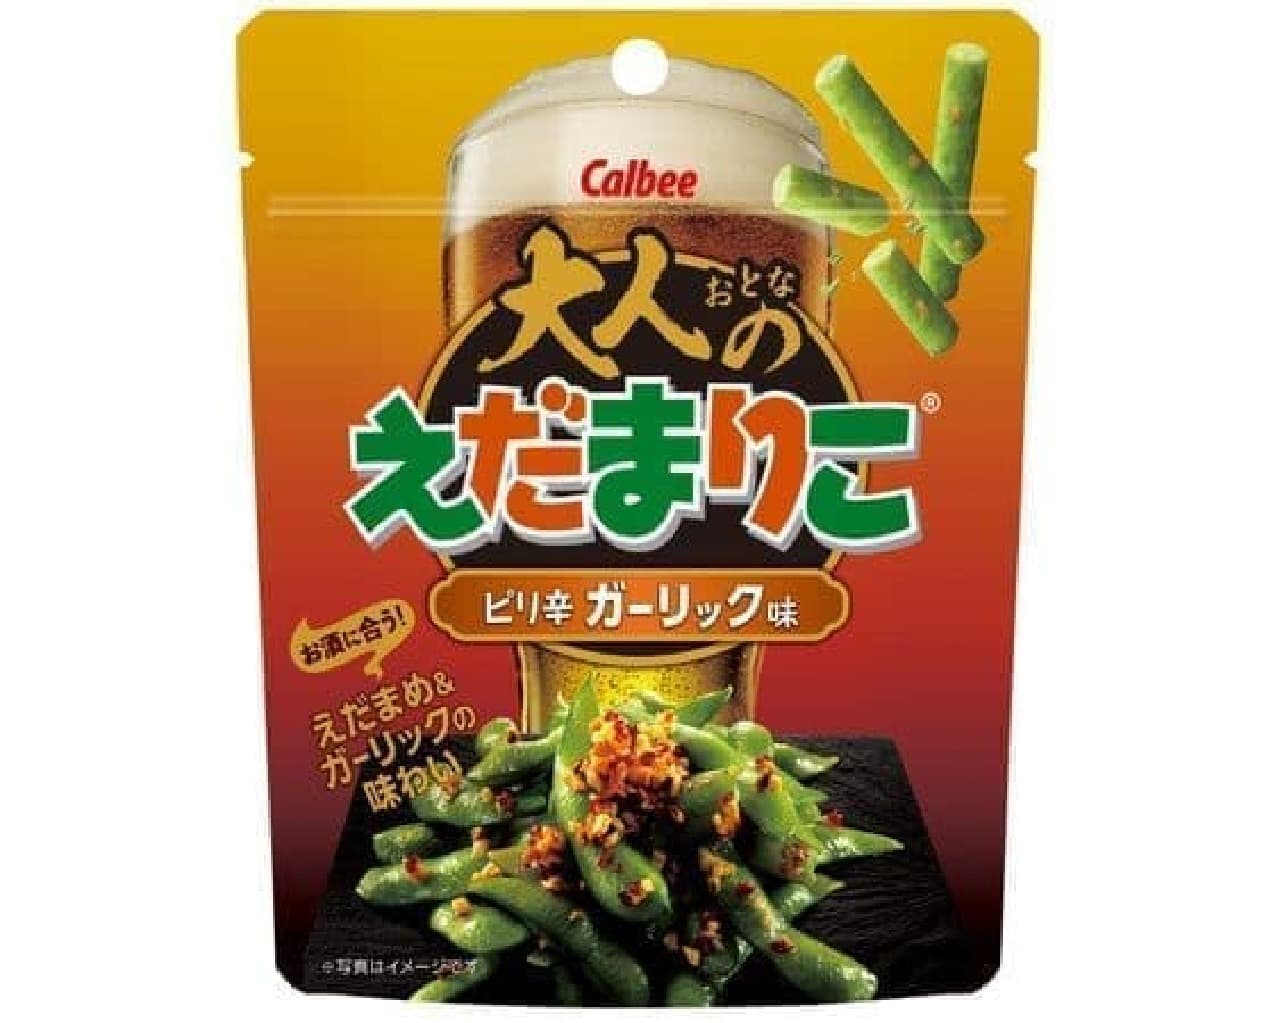 Adult Eda Mariko Spicy garlic flavor